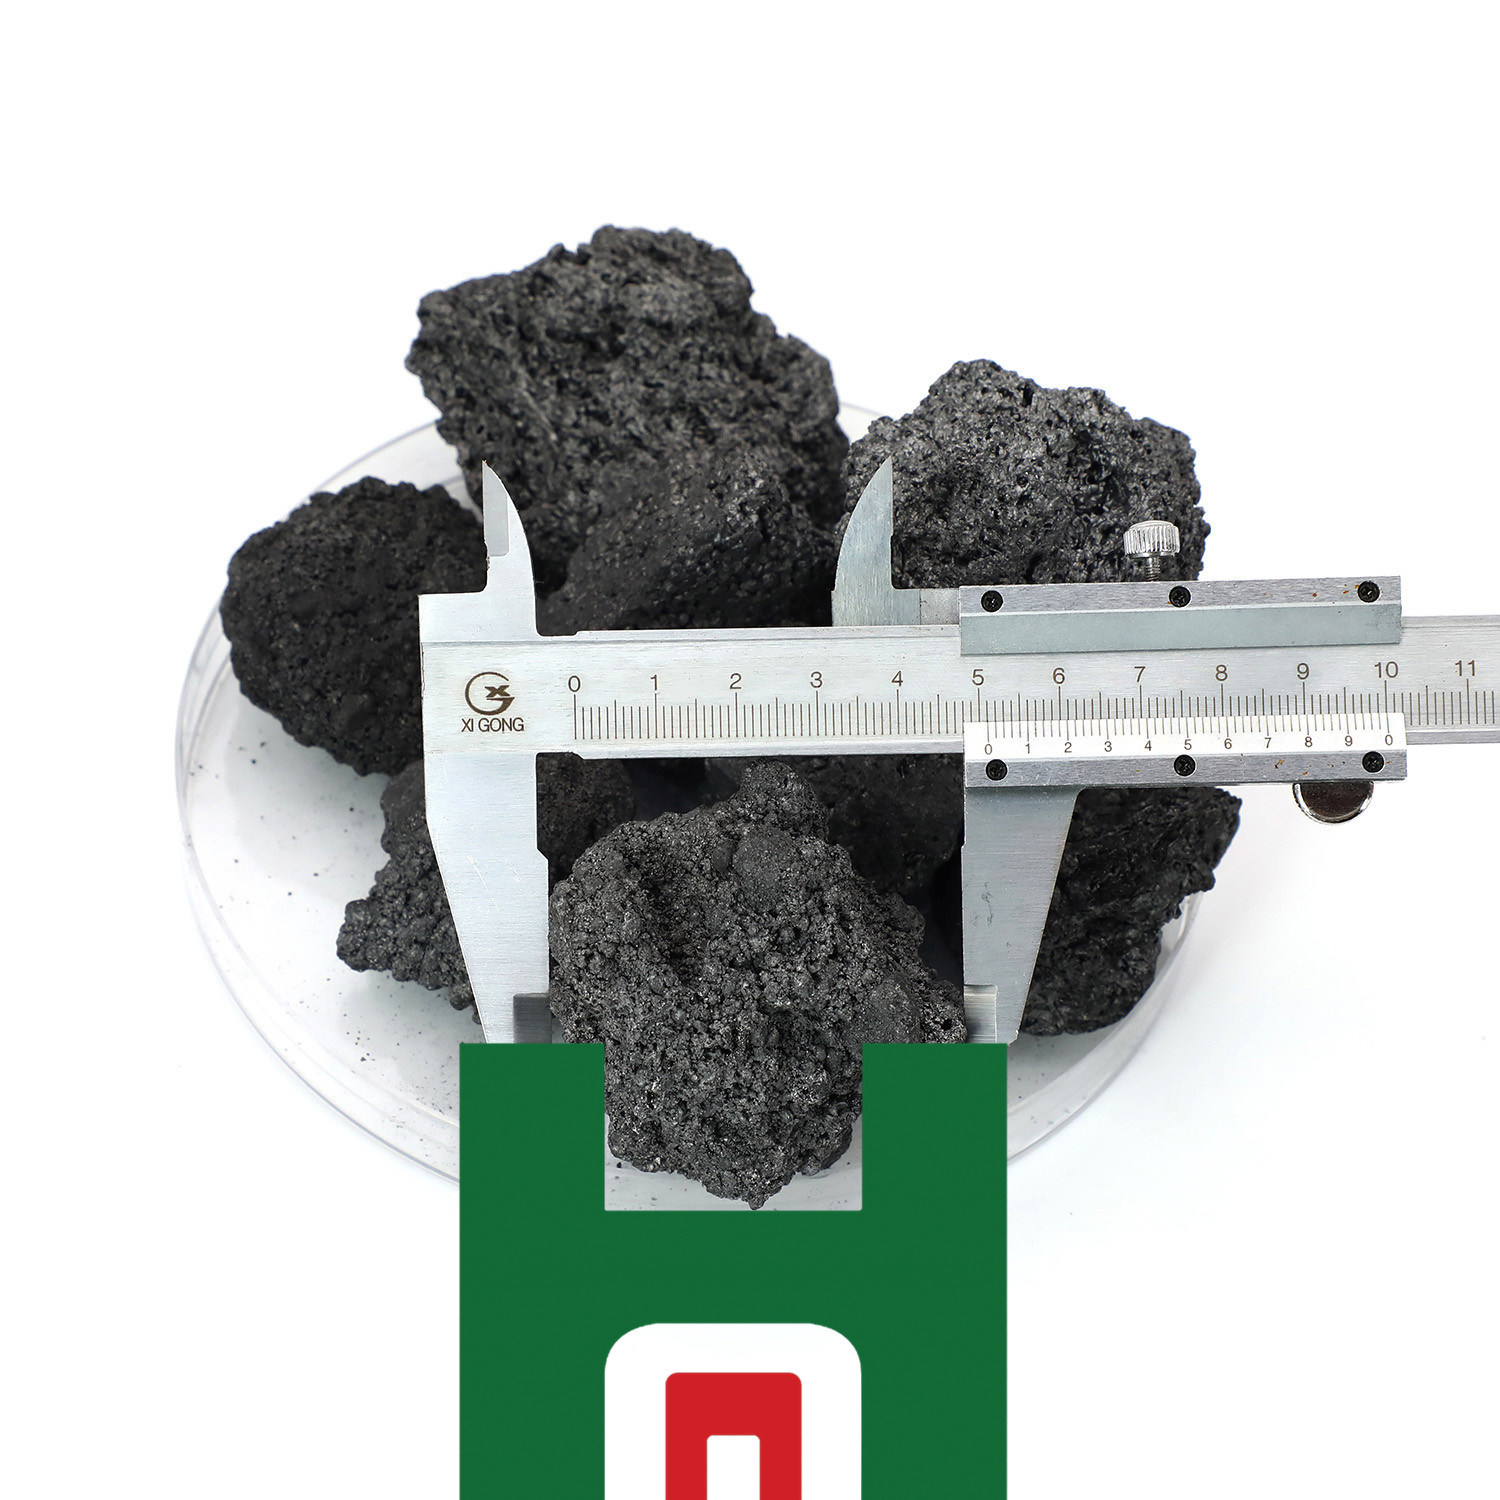 black silicon carbide powder price SiC powder